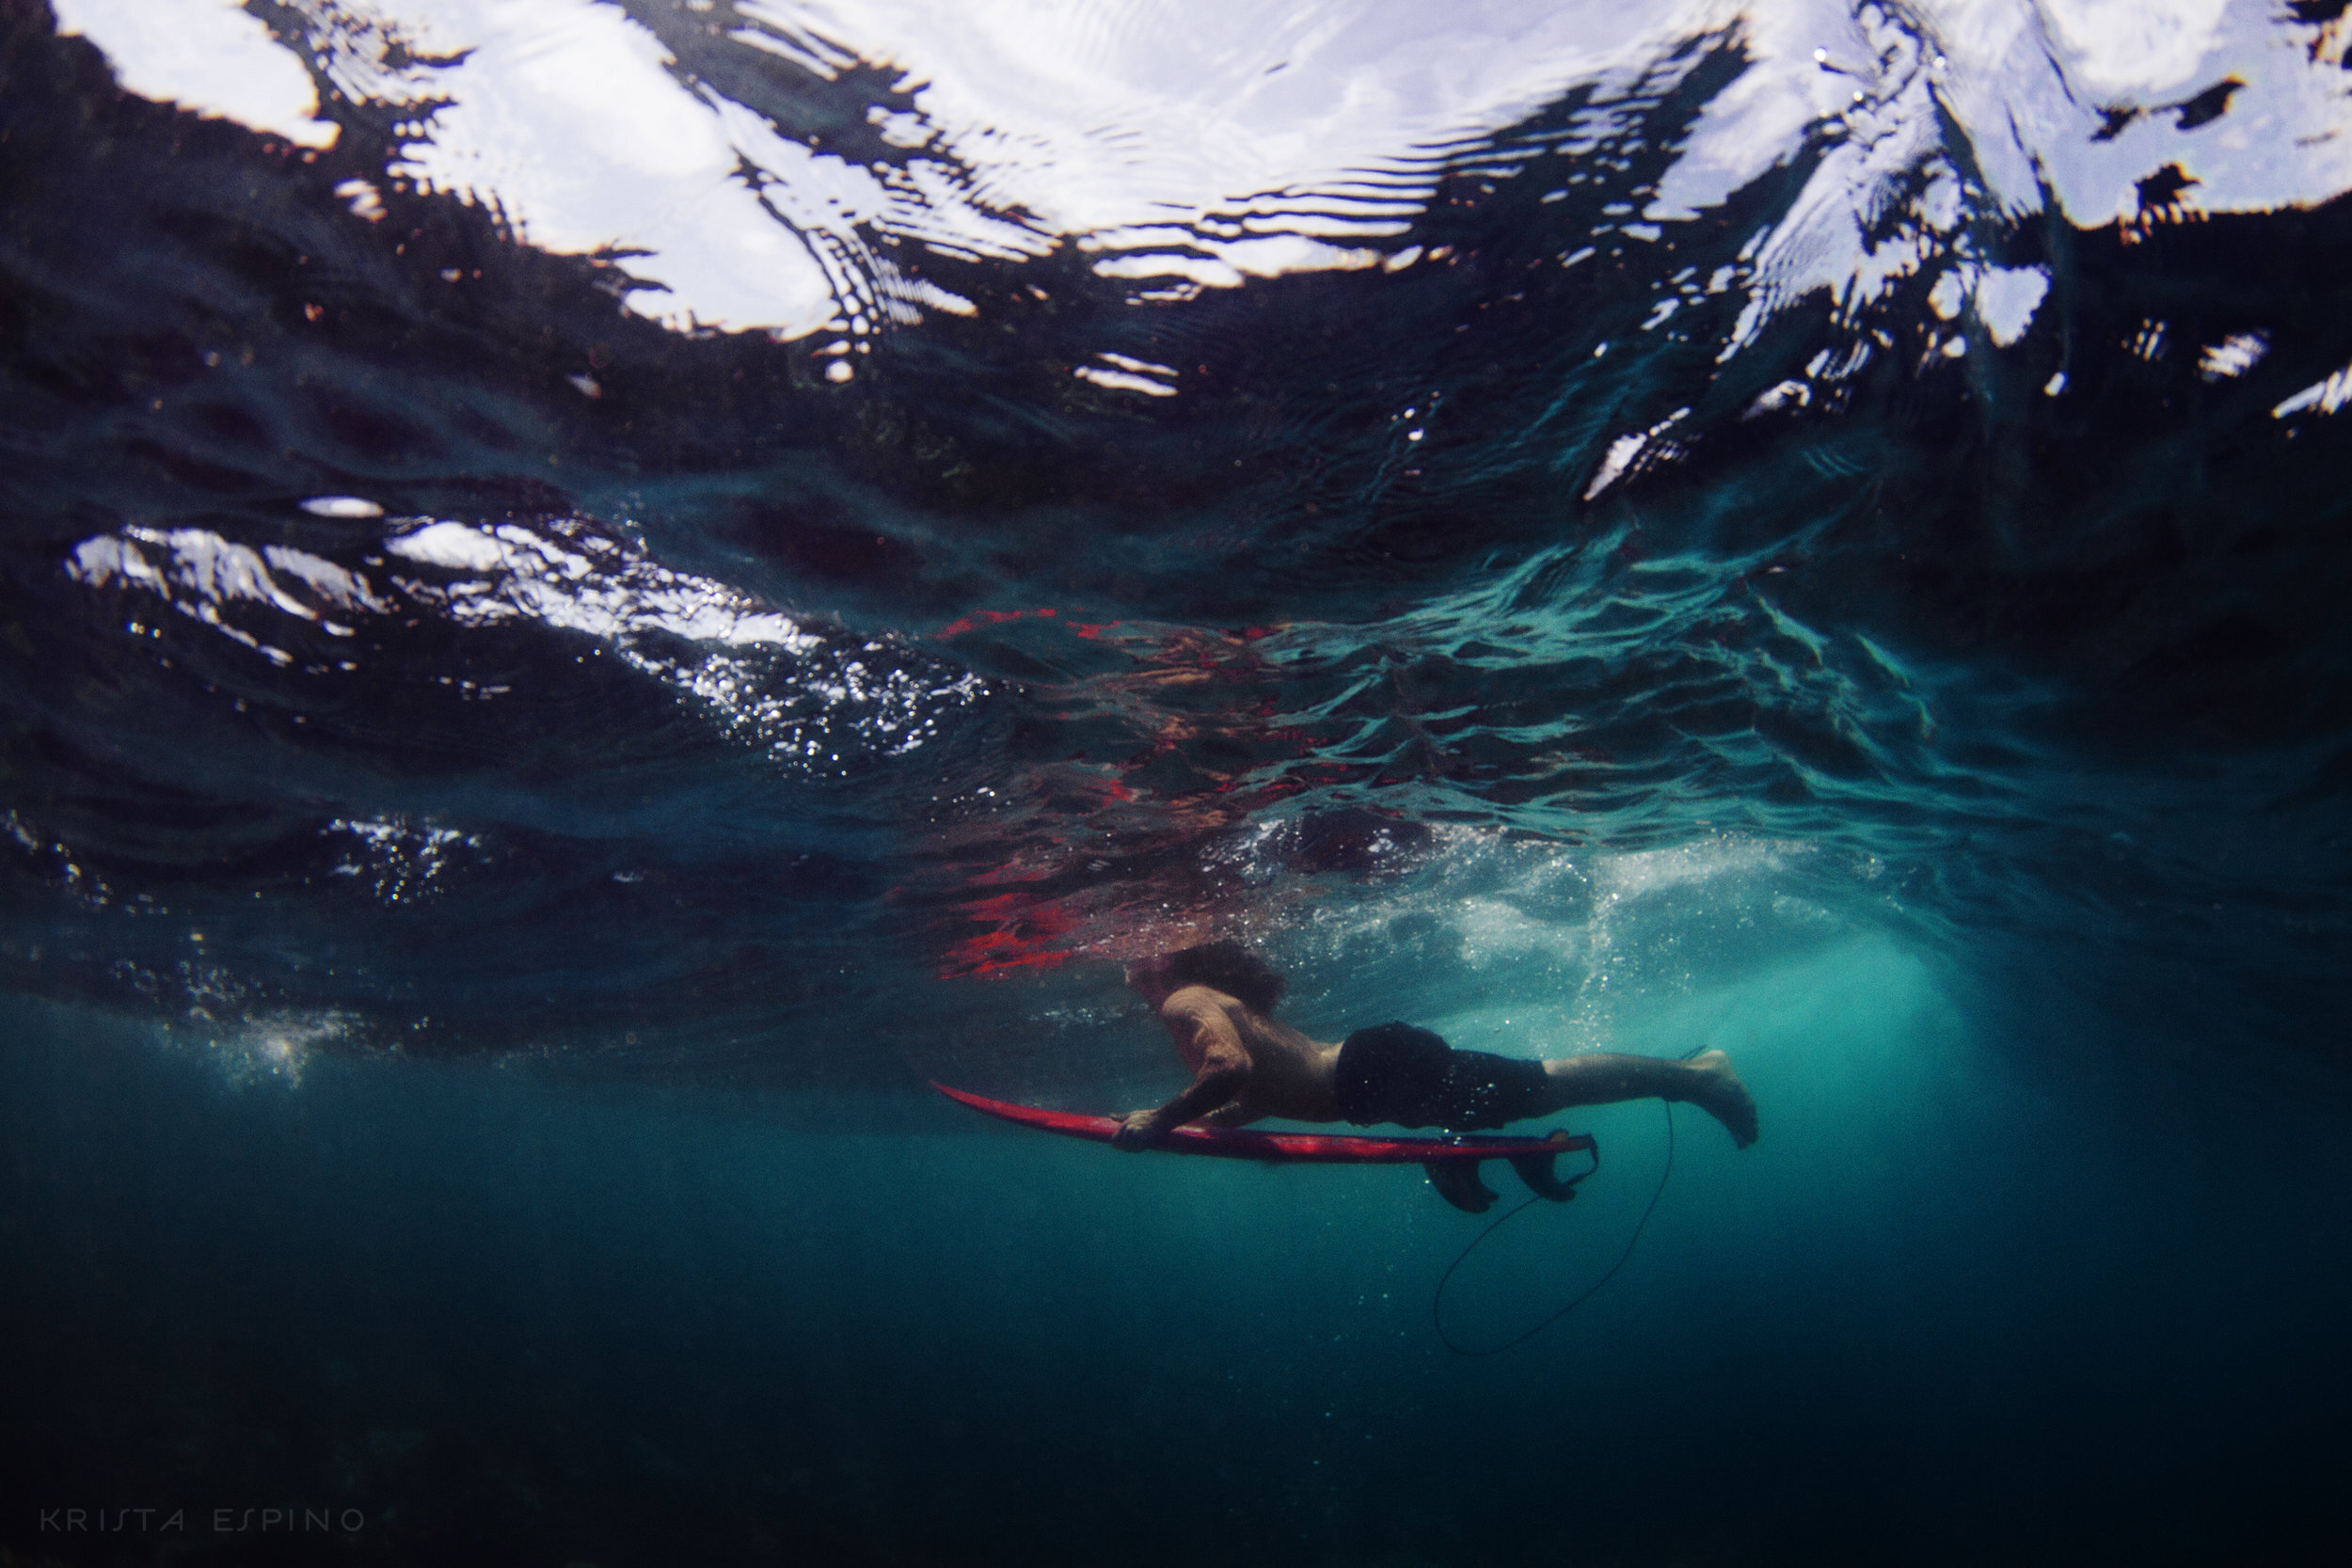 banyans surf surfer surfing hawaii big island travel nature underwater ocean beach kona photography photographer krista espino12.jpg